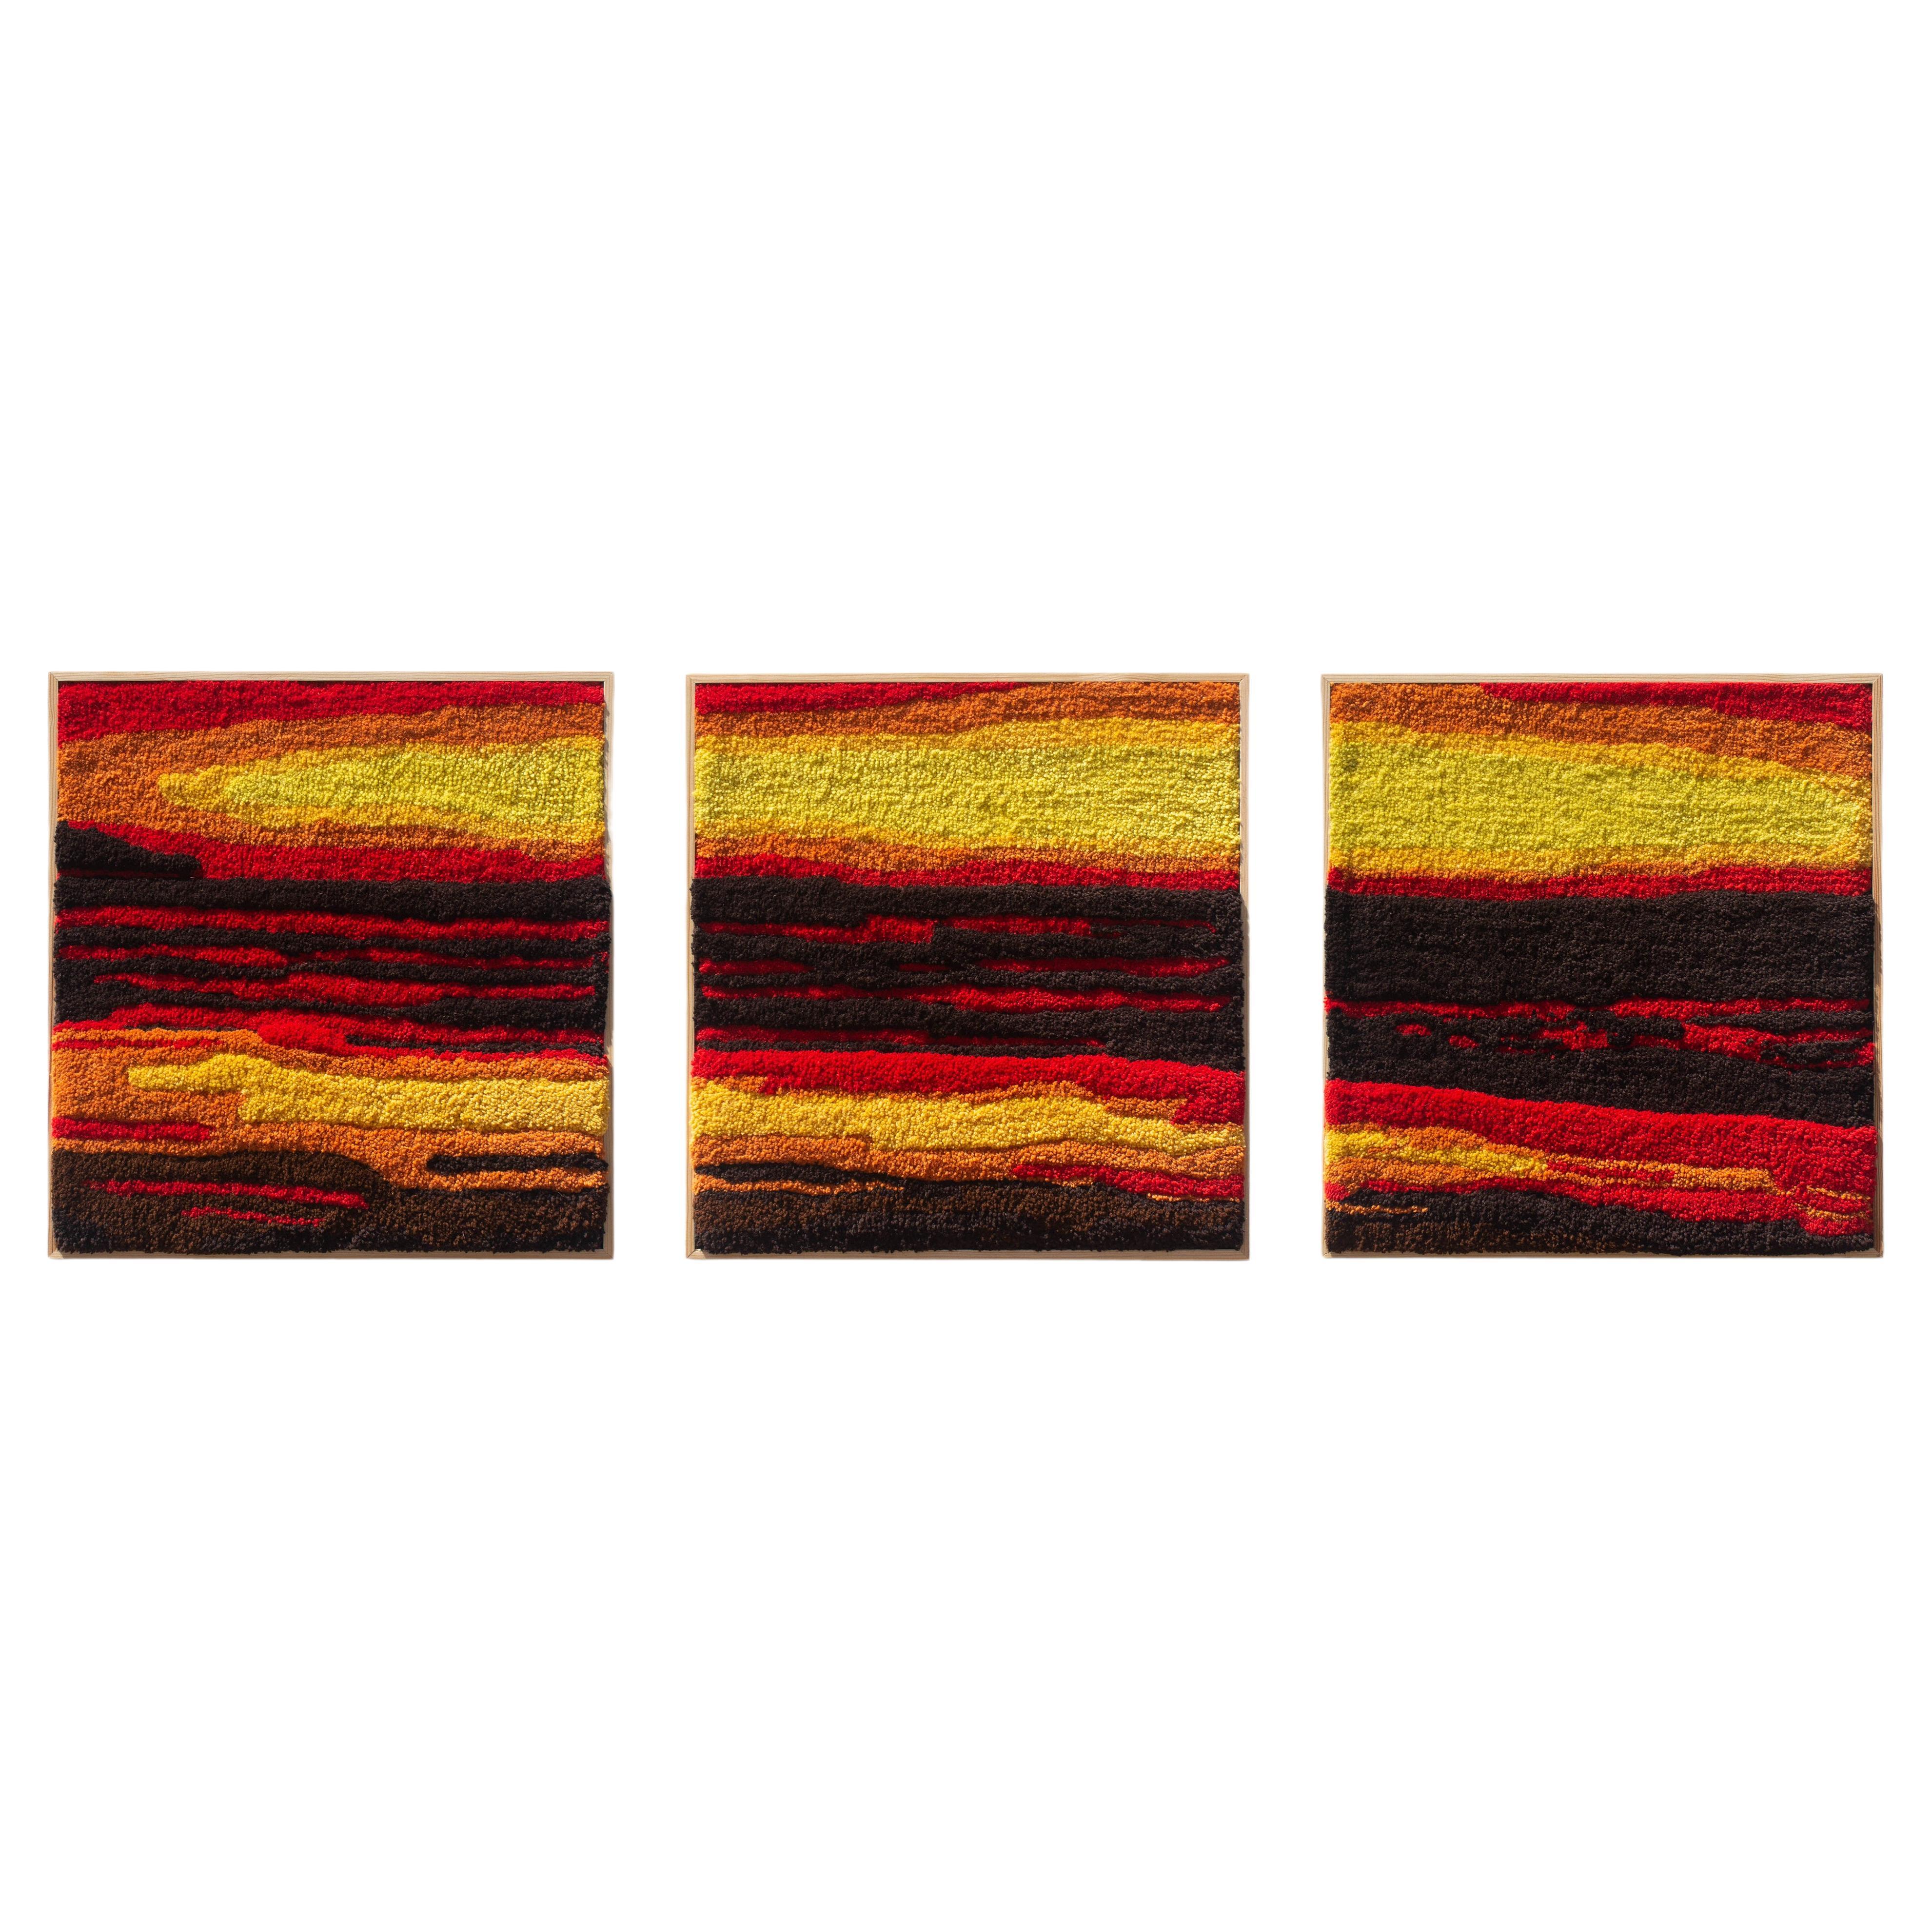 Handmade Contemporary Wool Wall Tapestry, Golden Hour Triptych, Beach Sunset 